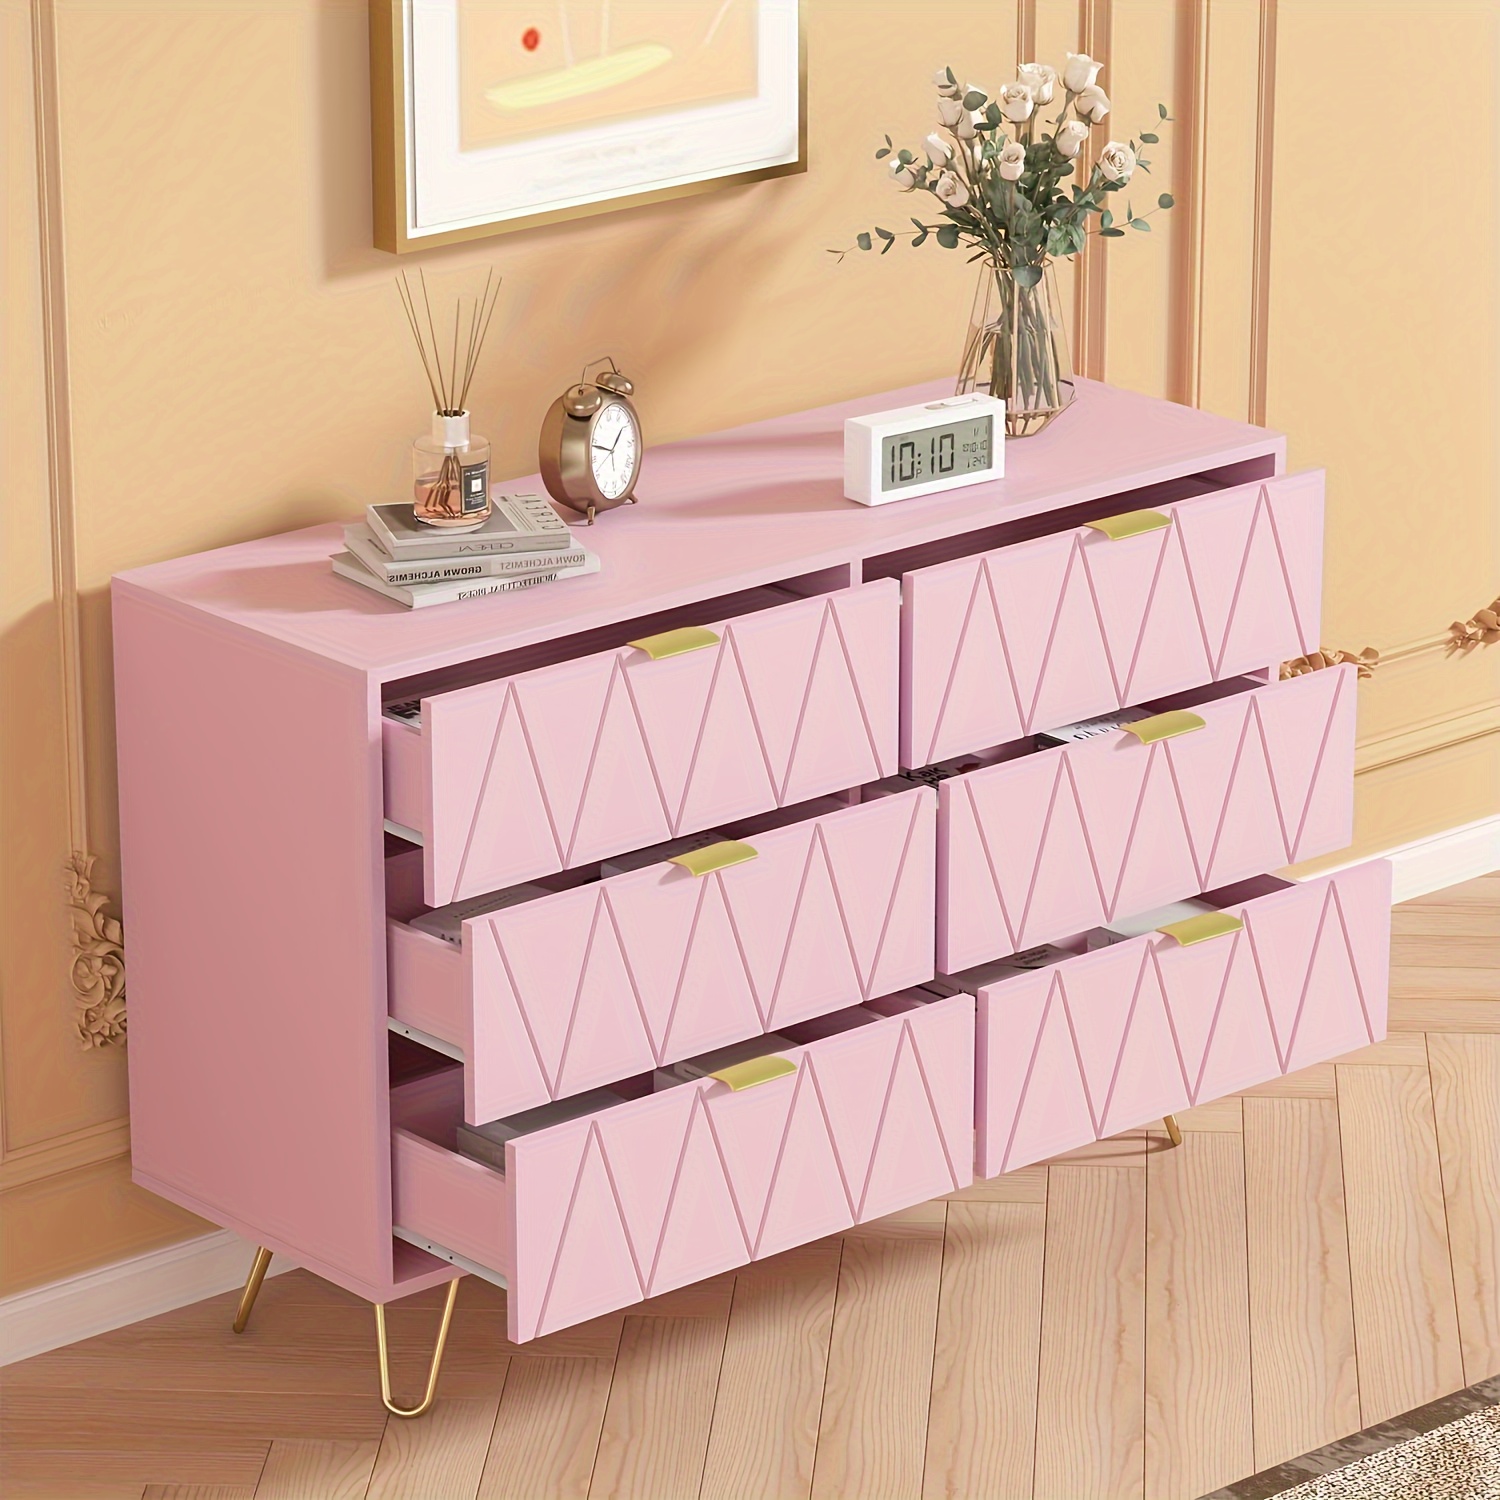 

Dresser For Bedroom, 6 Drawer Dresser, Wide Large Dressers & Chest Of Drawers, Modern Dresser With Gold Handles For Bedroom Living Room Entryway, White Black Pink